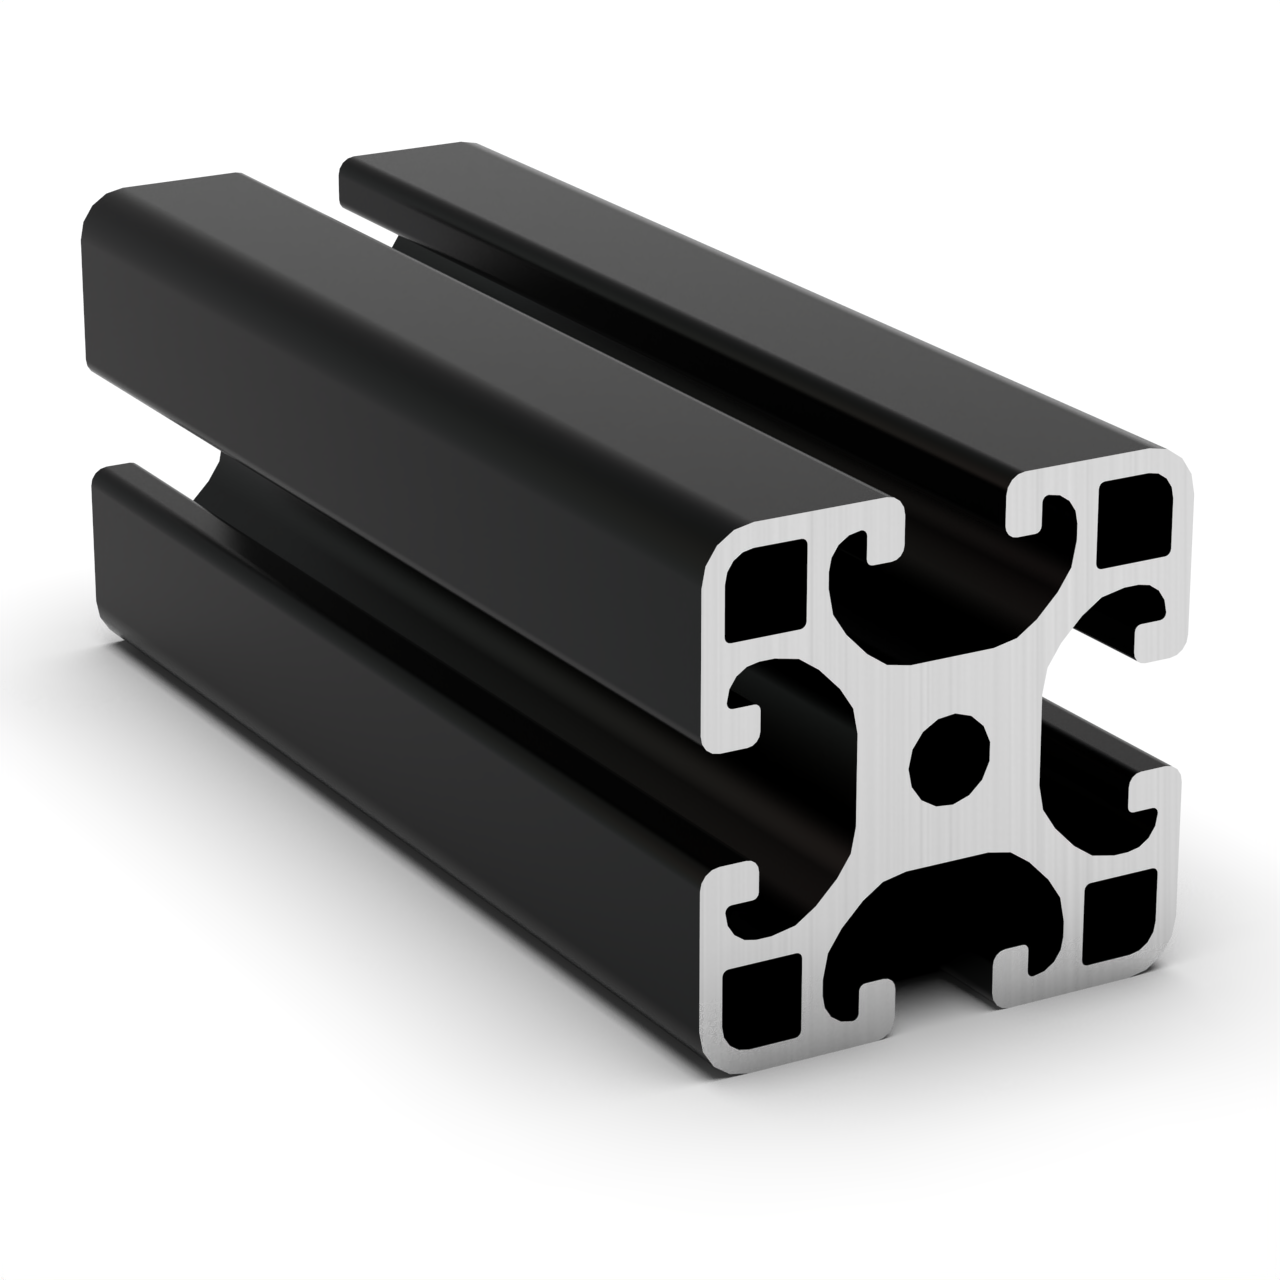 TSLOTS 40-4040-Lite-Black 40mm x 40mm Light Black Anodize 8mm tslot Aluminum Framing Profile